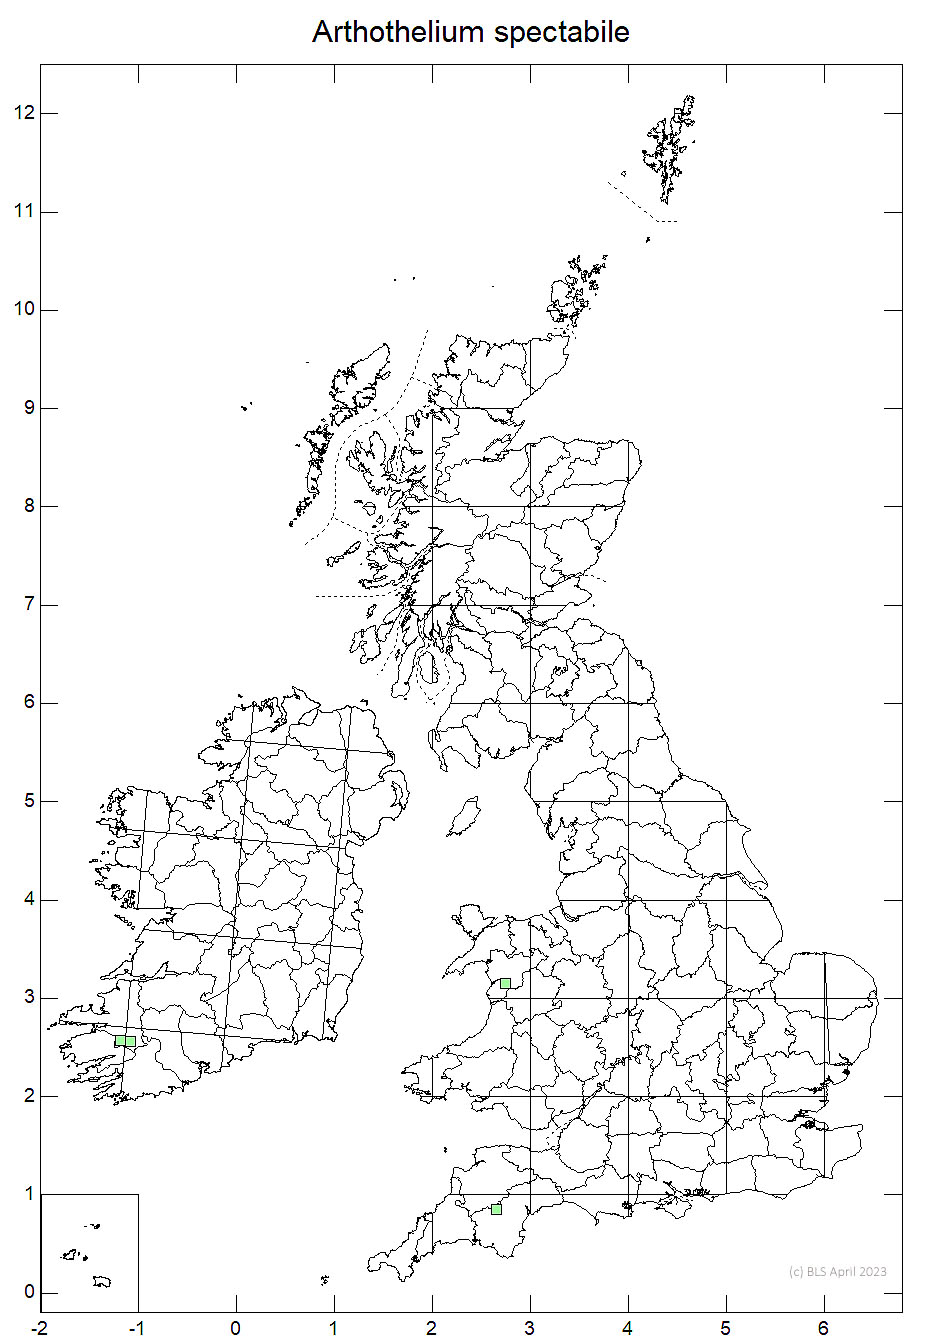 Arthothelium spectabile 10km sq distribution map